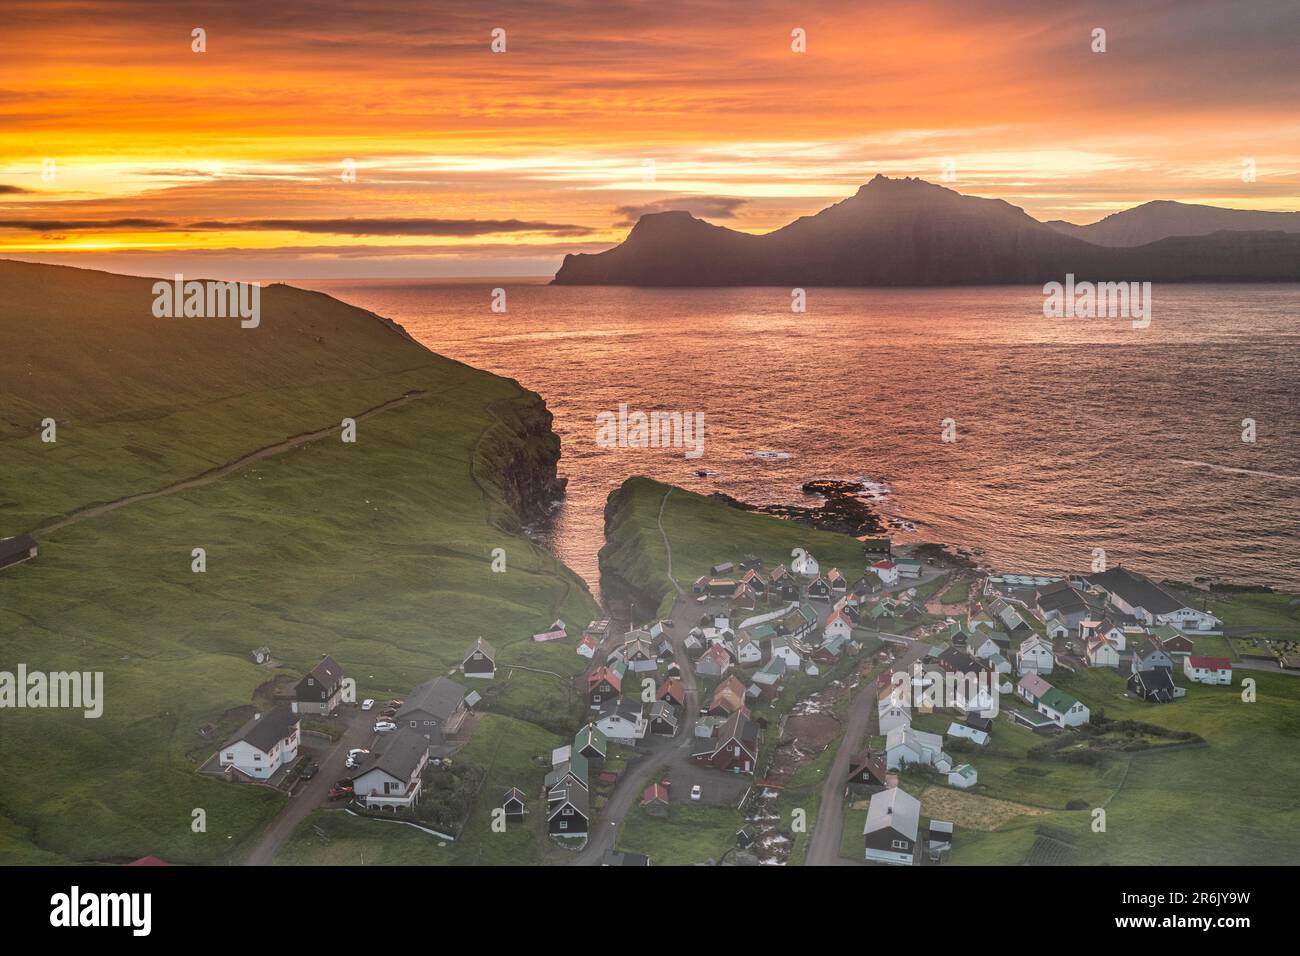 Fiery sky at dawn over Kalsoy island and the village of Gjogv, overhead view, Eysturoy Island, Faroe Islands, Denmark, Europe Stock Photo